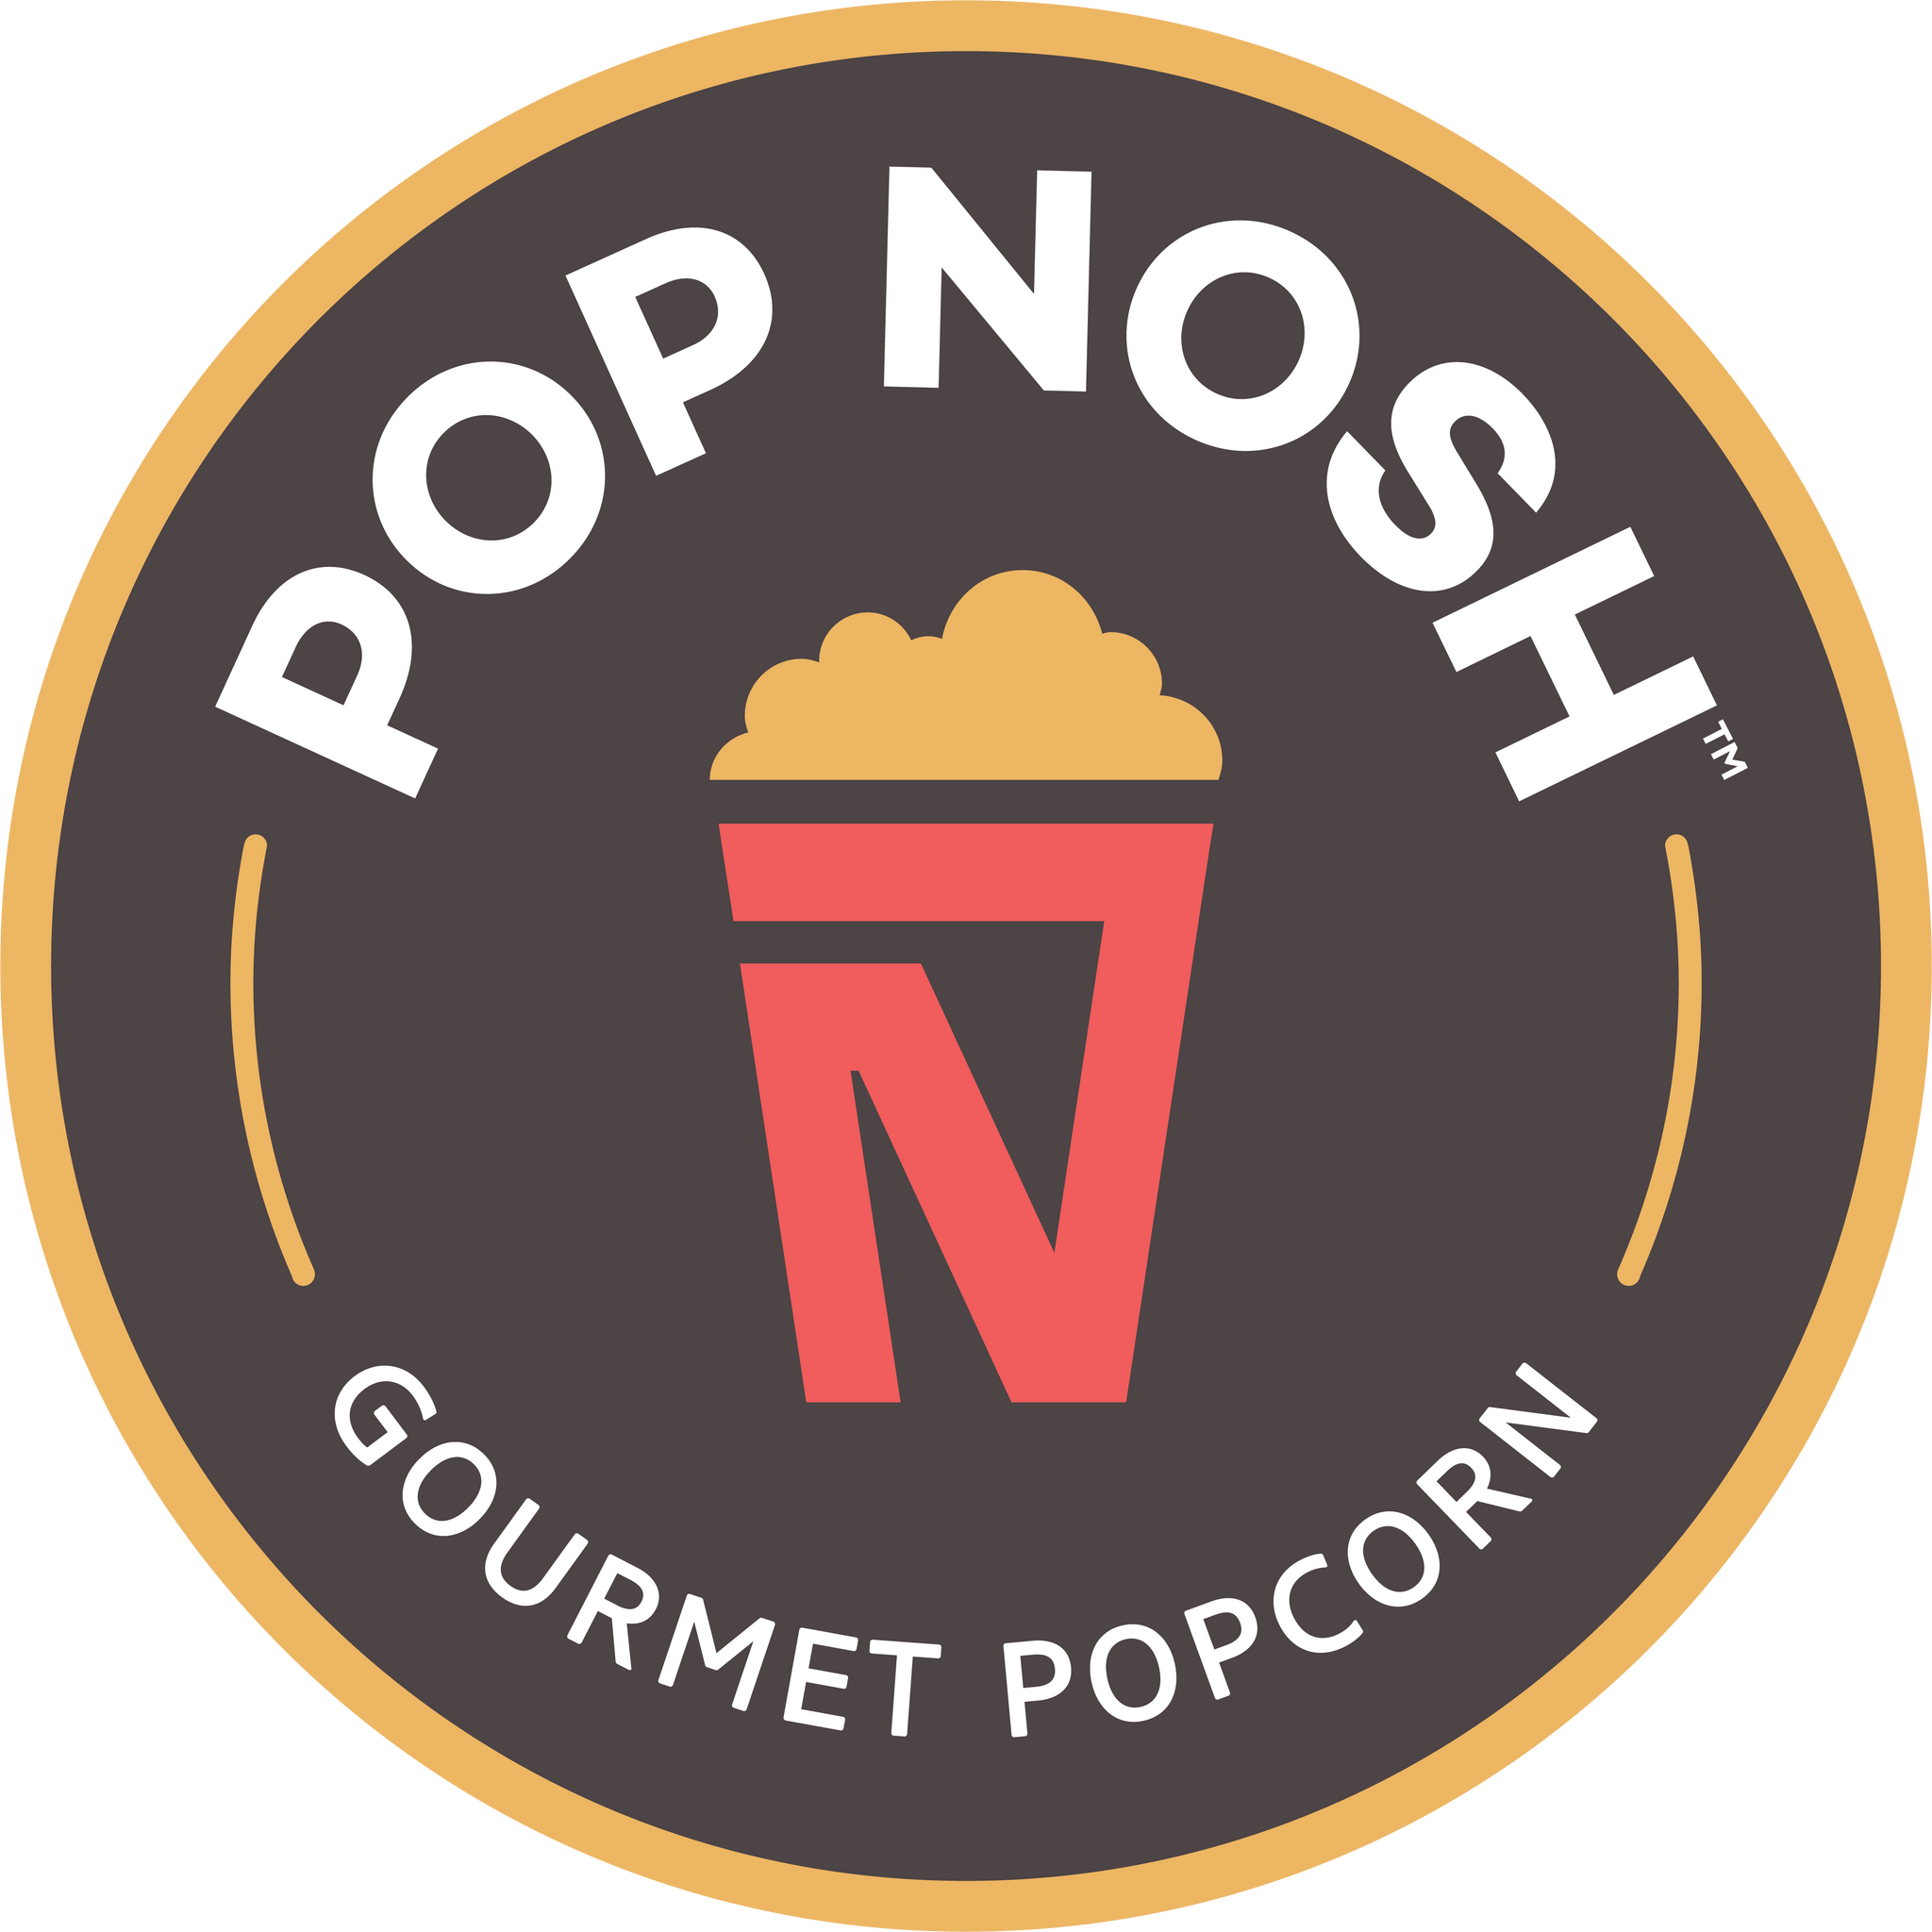 Refining Snacking | Pop Nosh